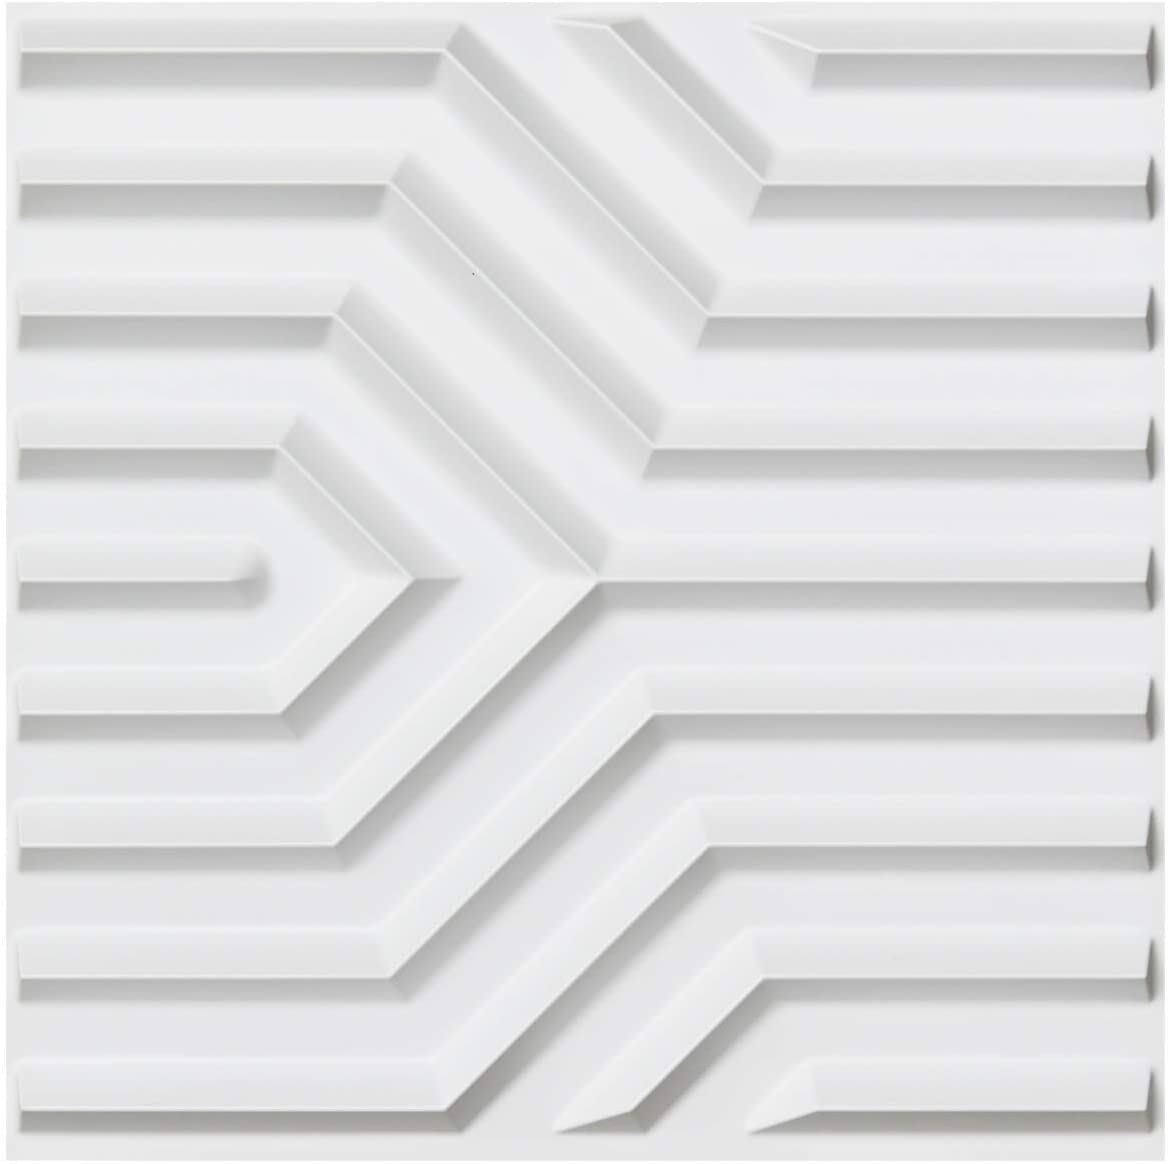 A10043 - Plastic 3D Wall Panel PVC Geometric Mate Pattern Wall Design, White, 12 Tiles 32 SF